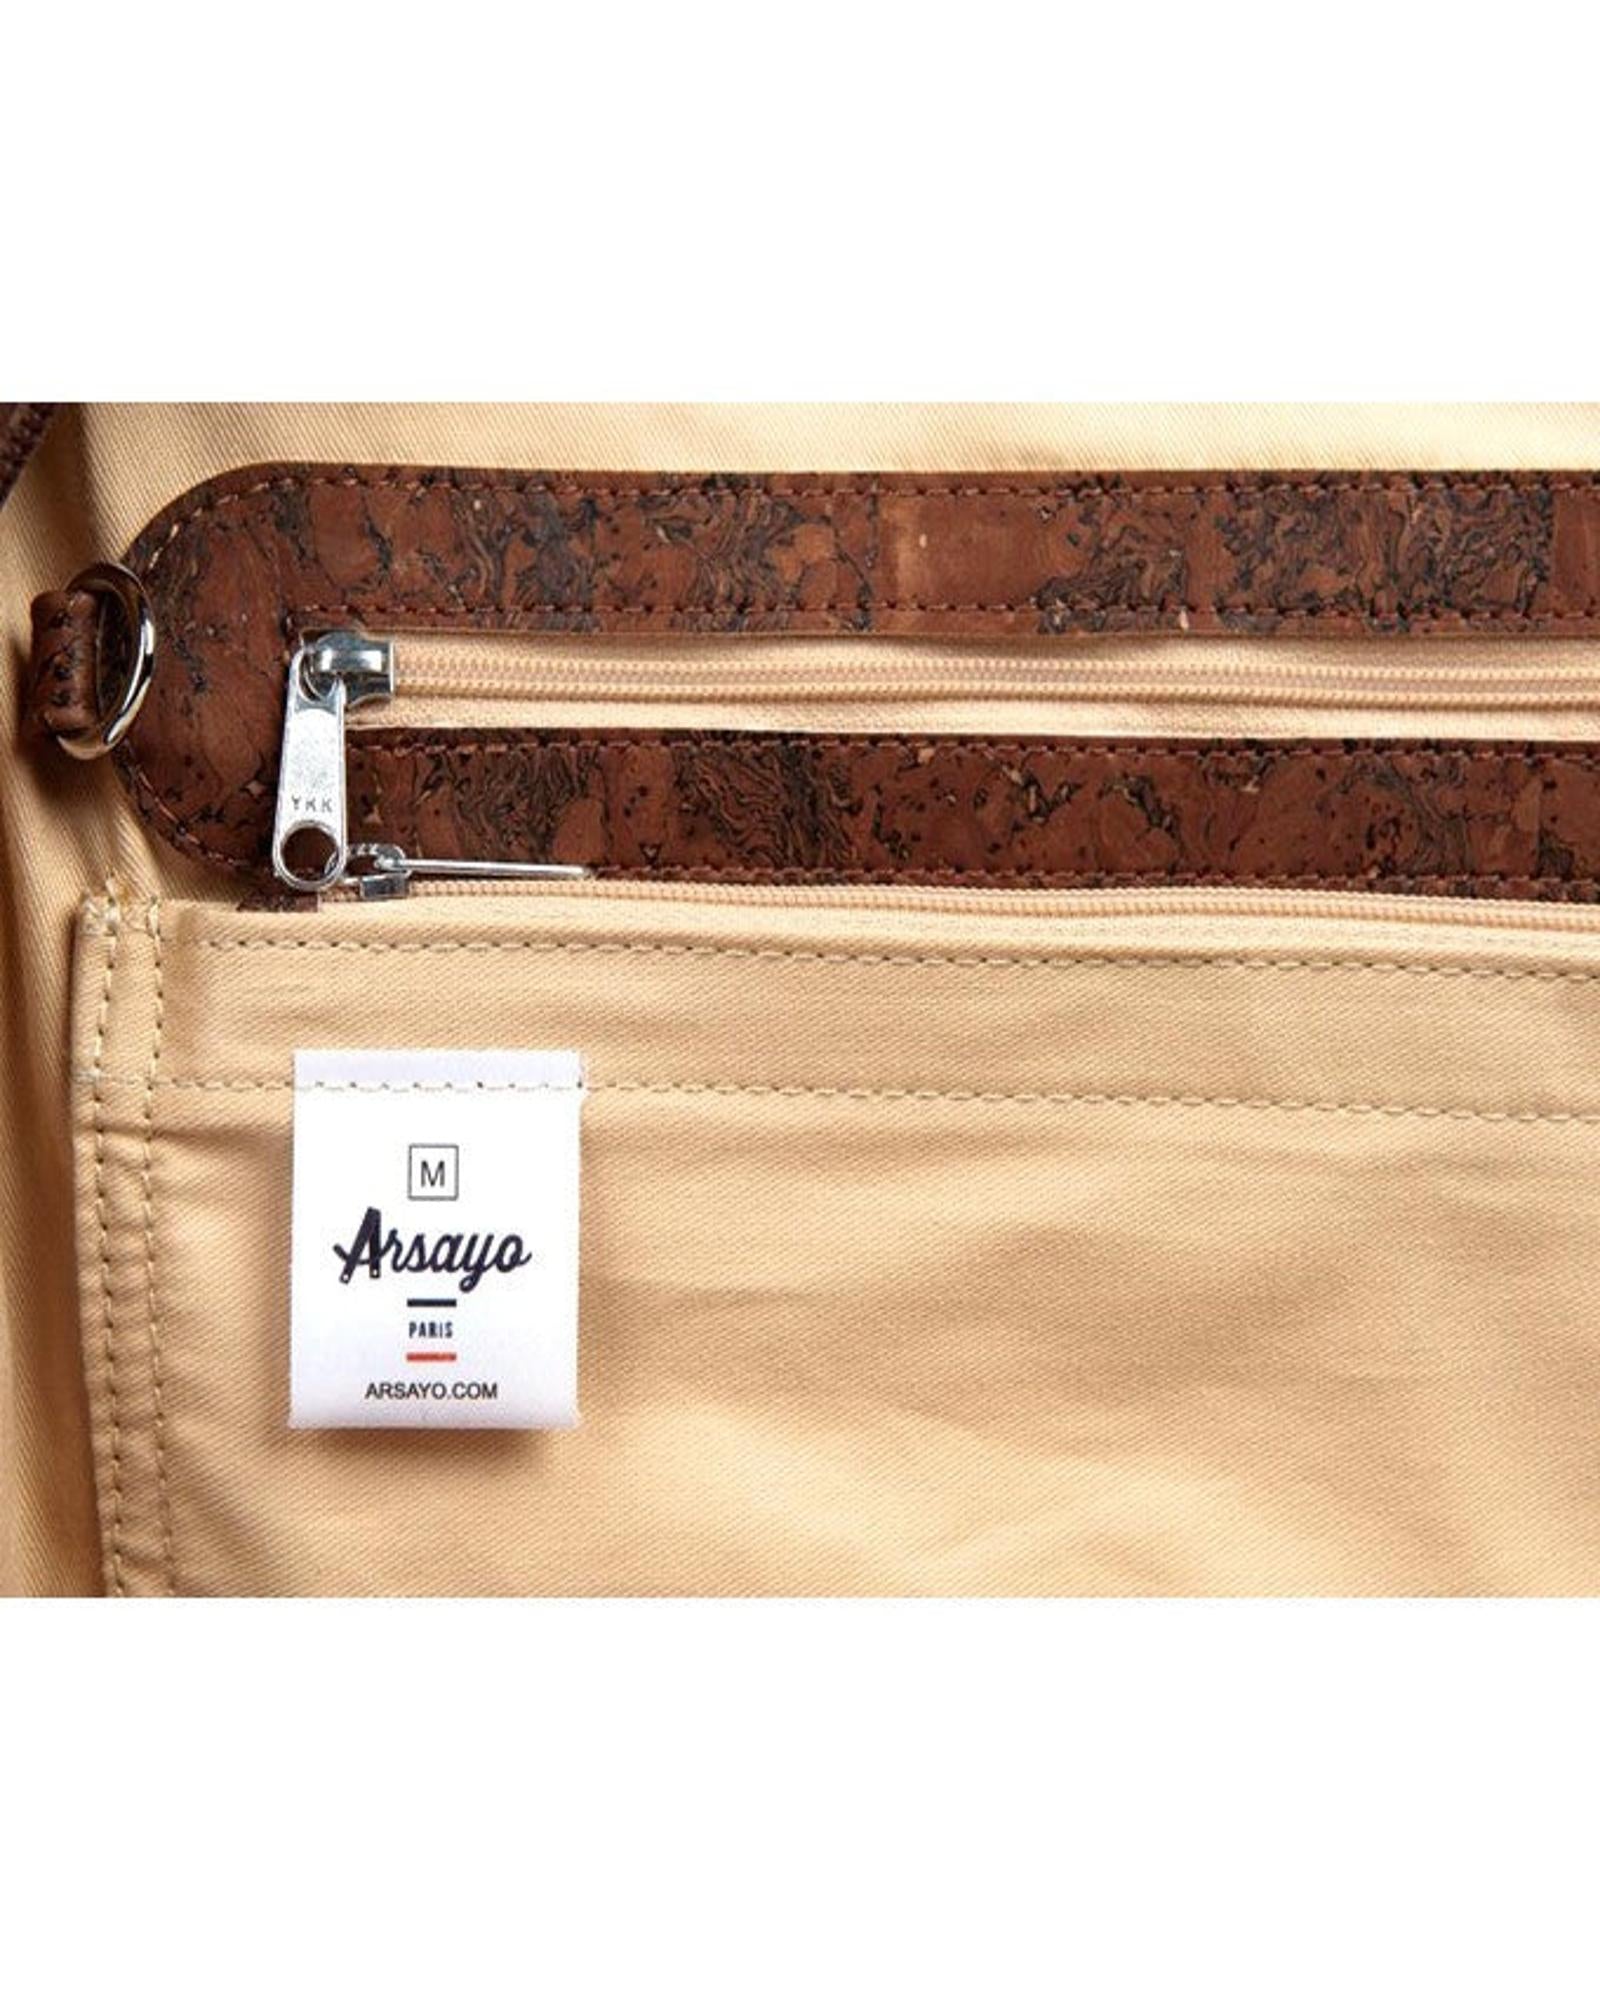 ARSAYO - ARSAYO Original Backpack | Camel